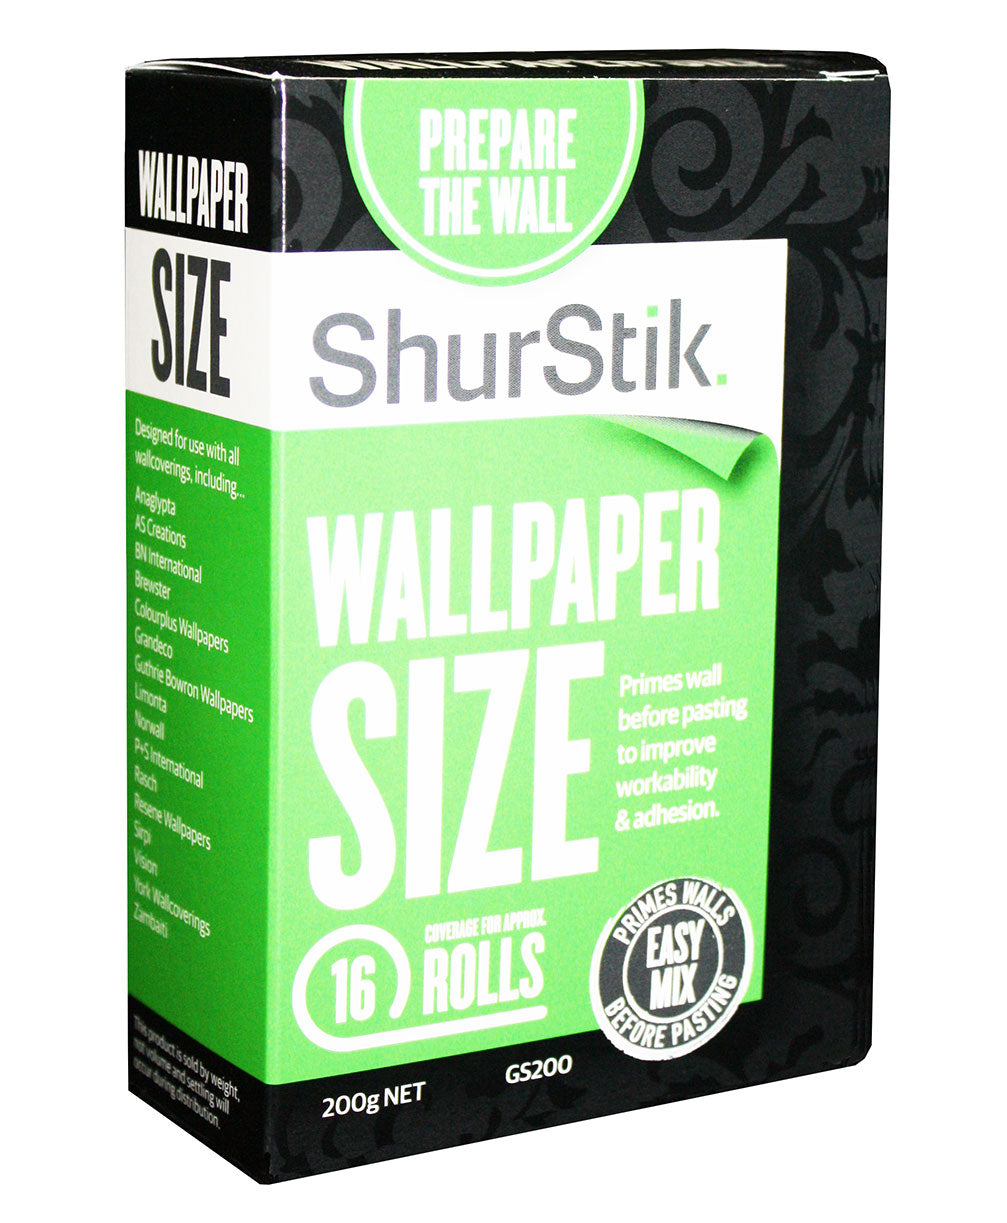 Shurstik Size Powder -16 Rolls